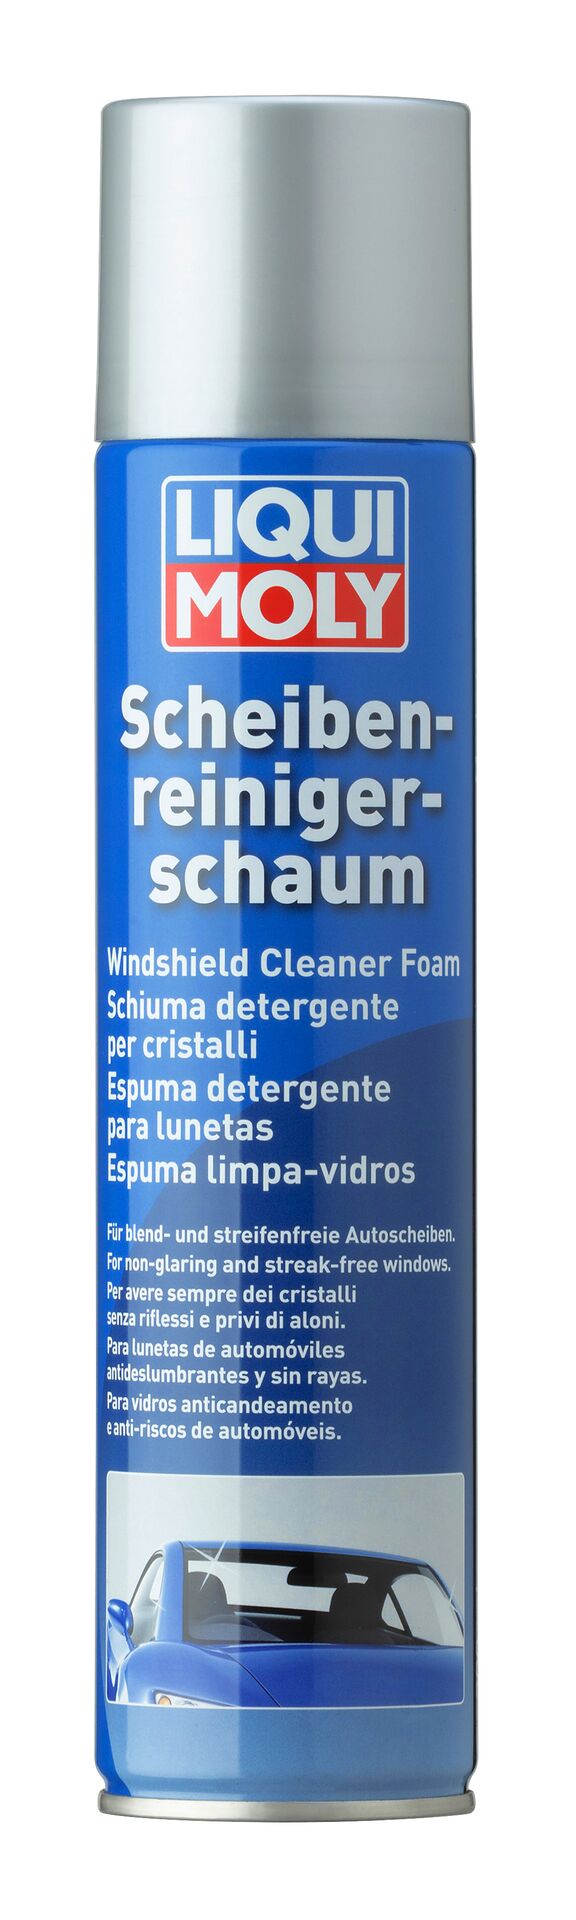 Windshield cleaner Foam 300ml - Liqui Moly